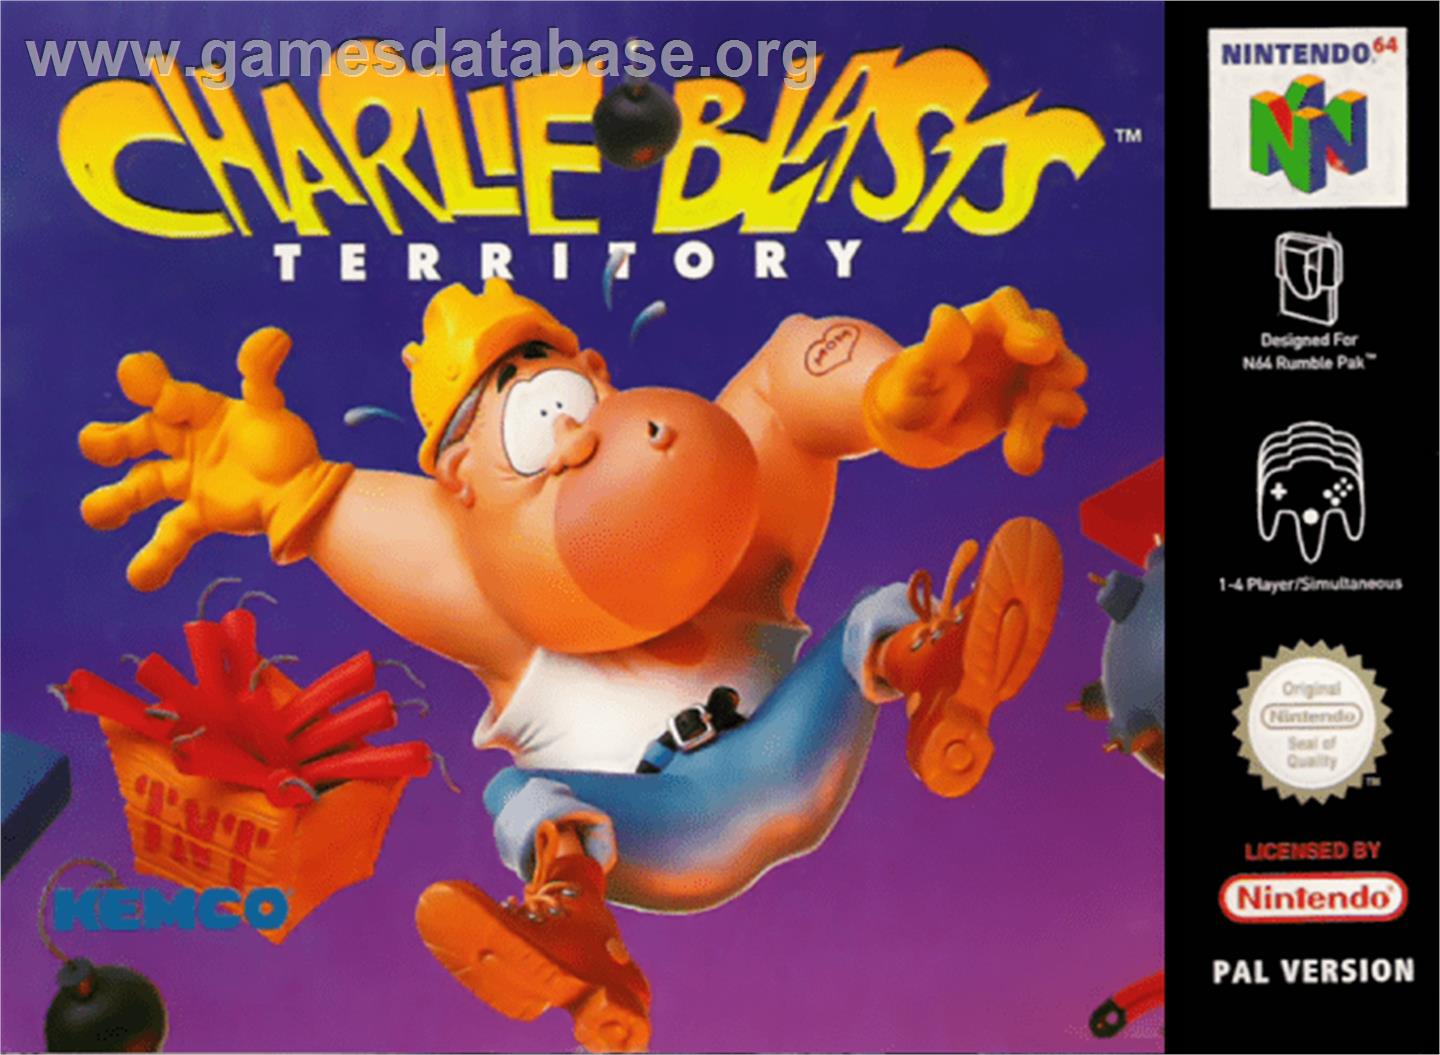 Charlie Blast's Territory - Nintendo N64 - Artwork - Box